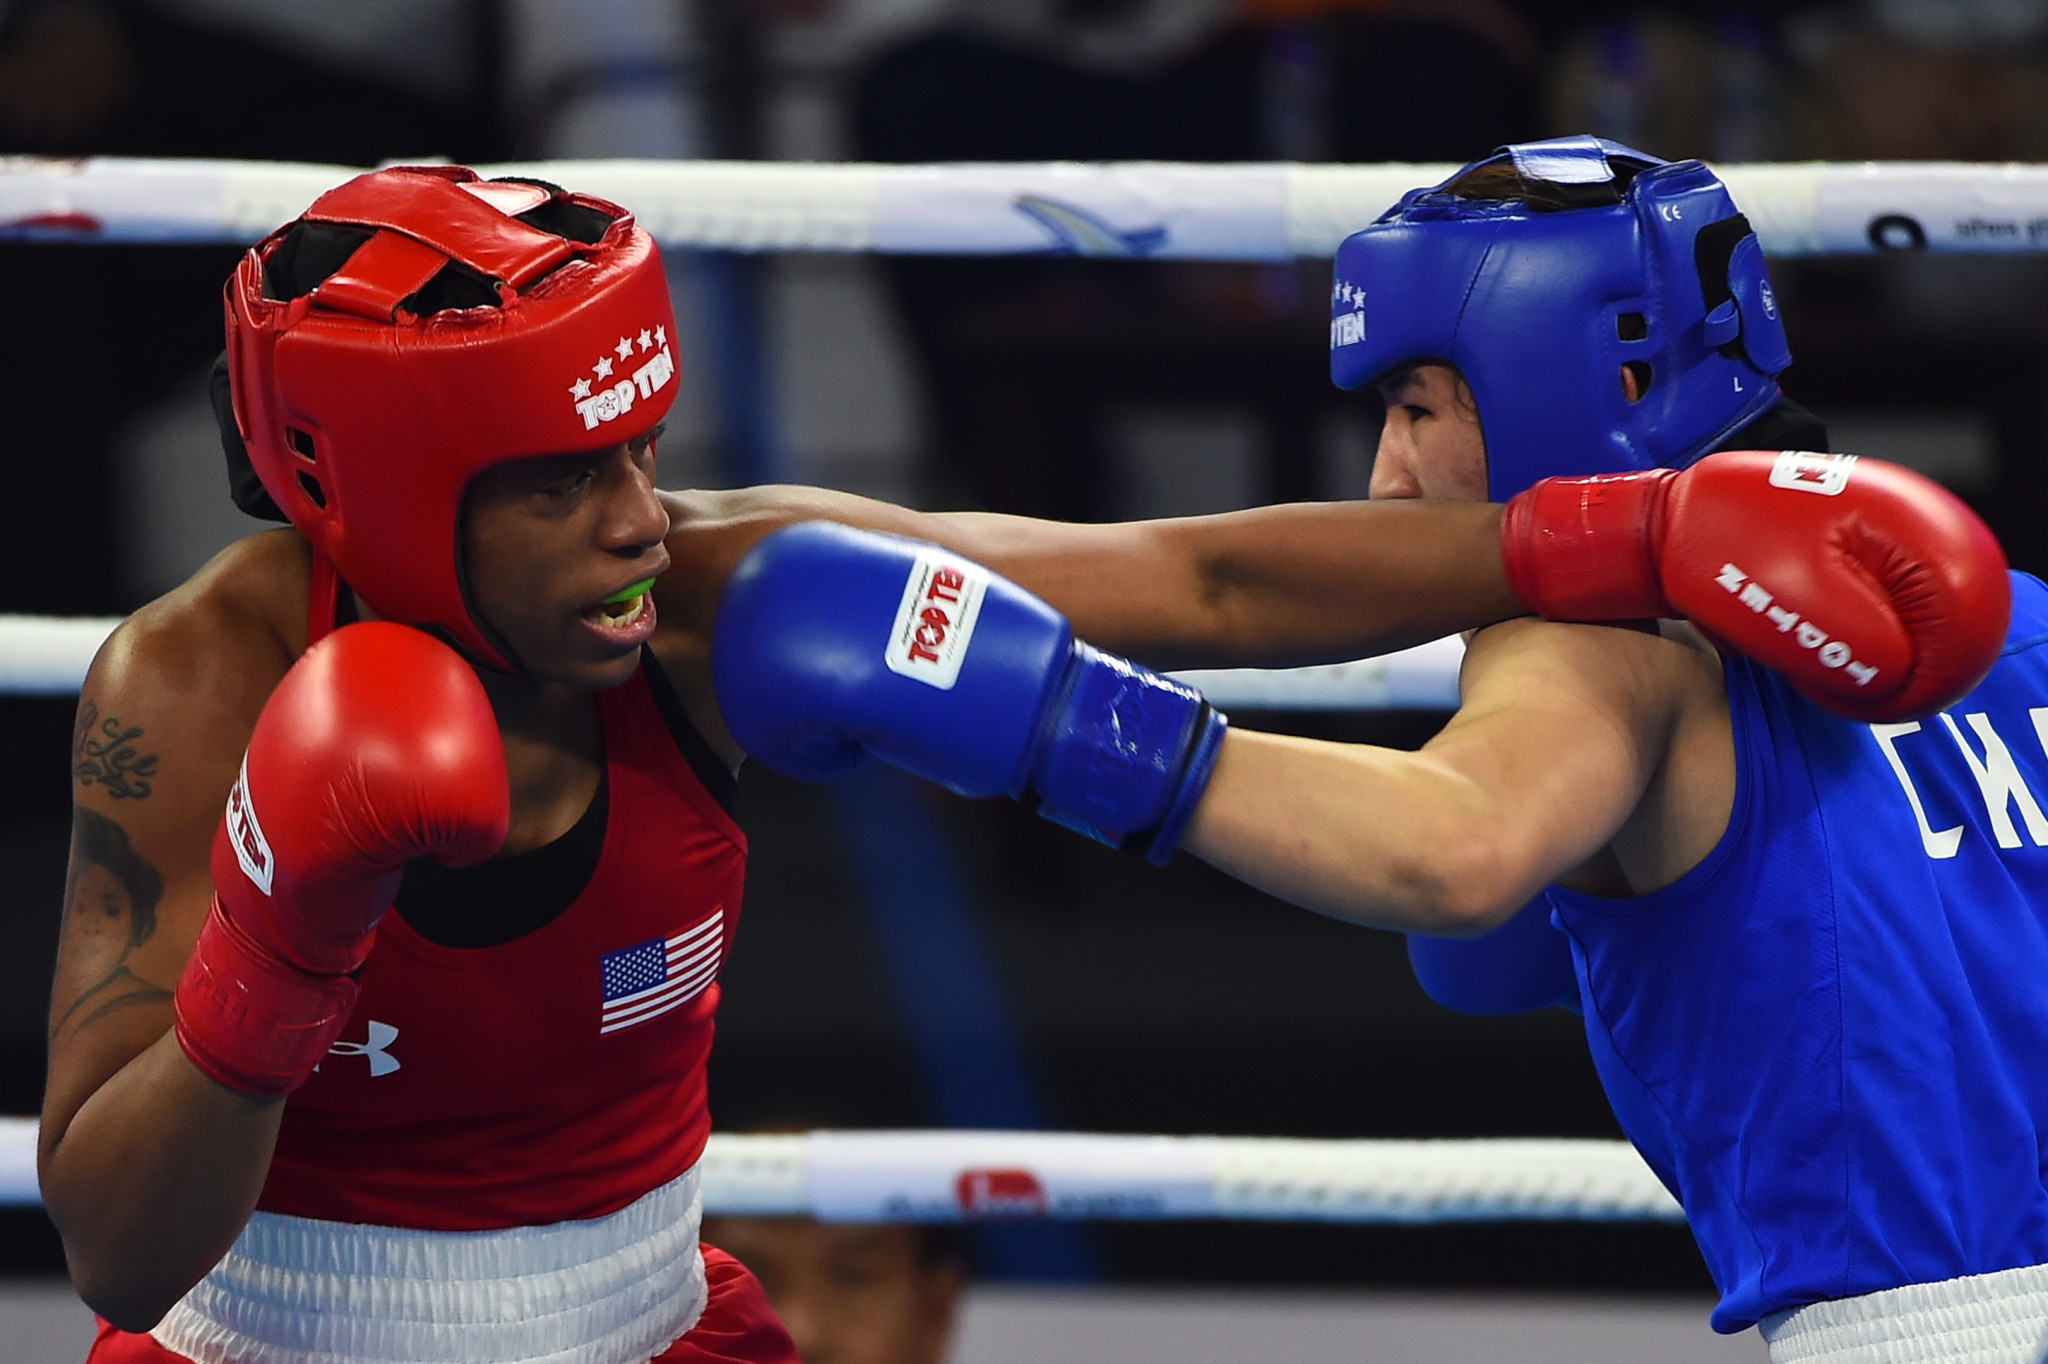 Pan American champion Graham edges into AIBA Women's World Boxing Championships quarter-final